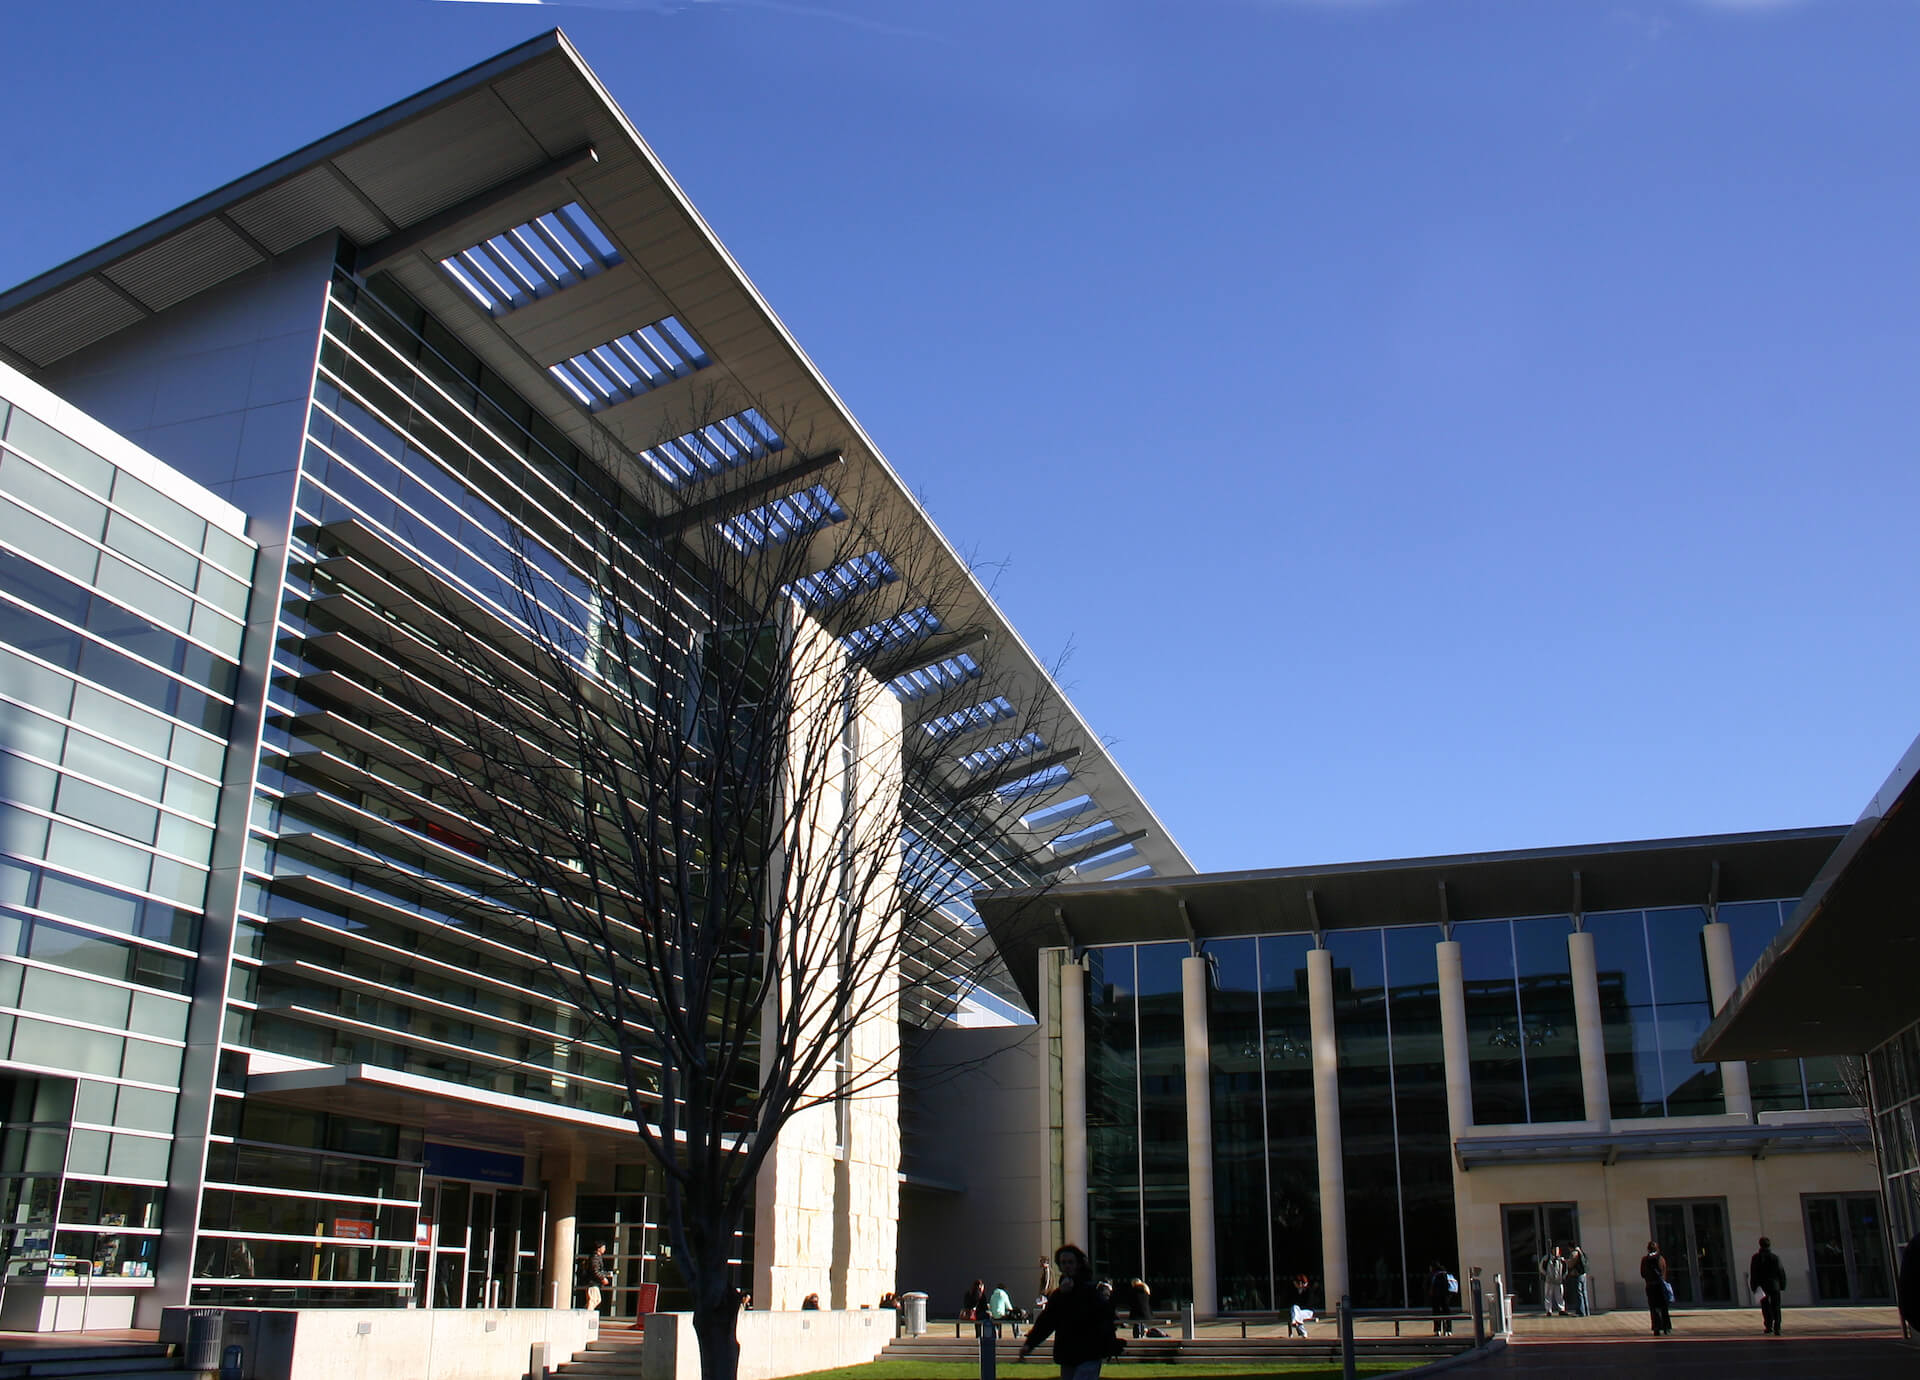 Building & Climate Control – University of Otago